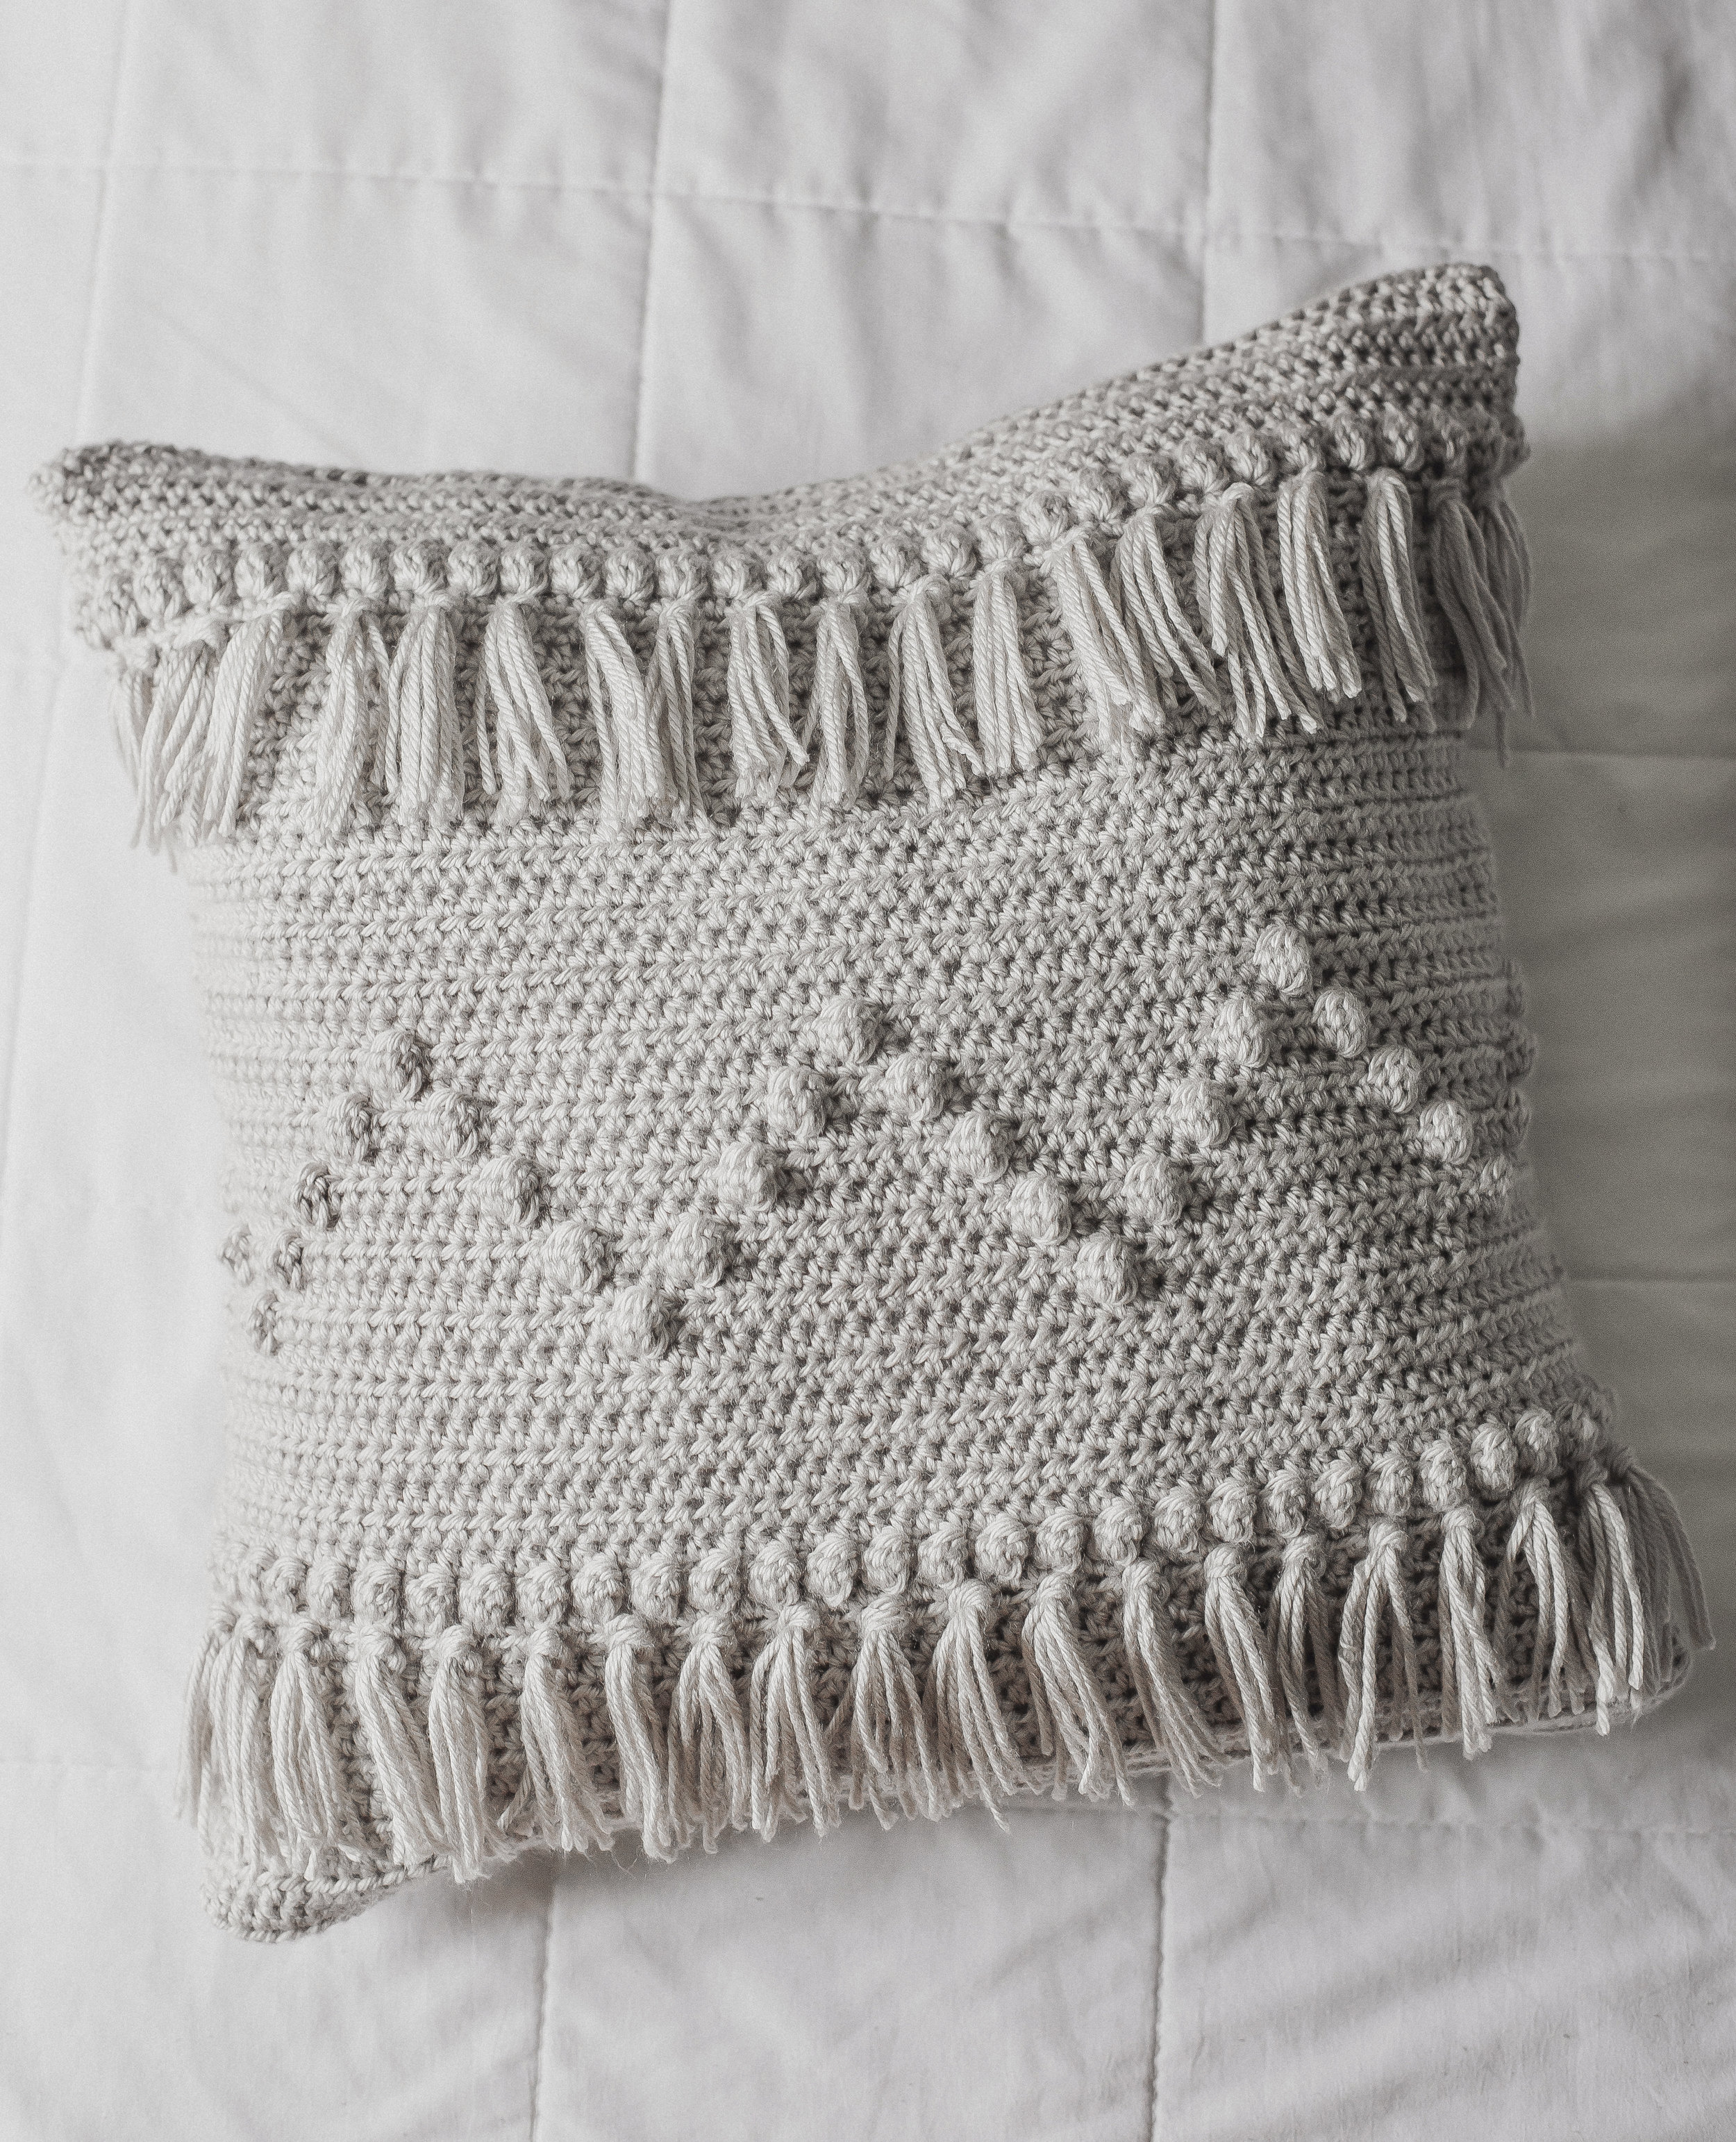 Cute Pin Cushion Free Crochet Patterns - Your Crochet